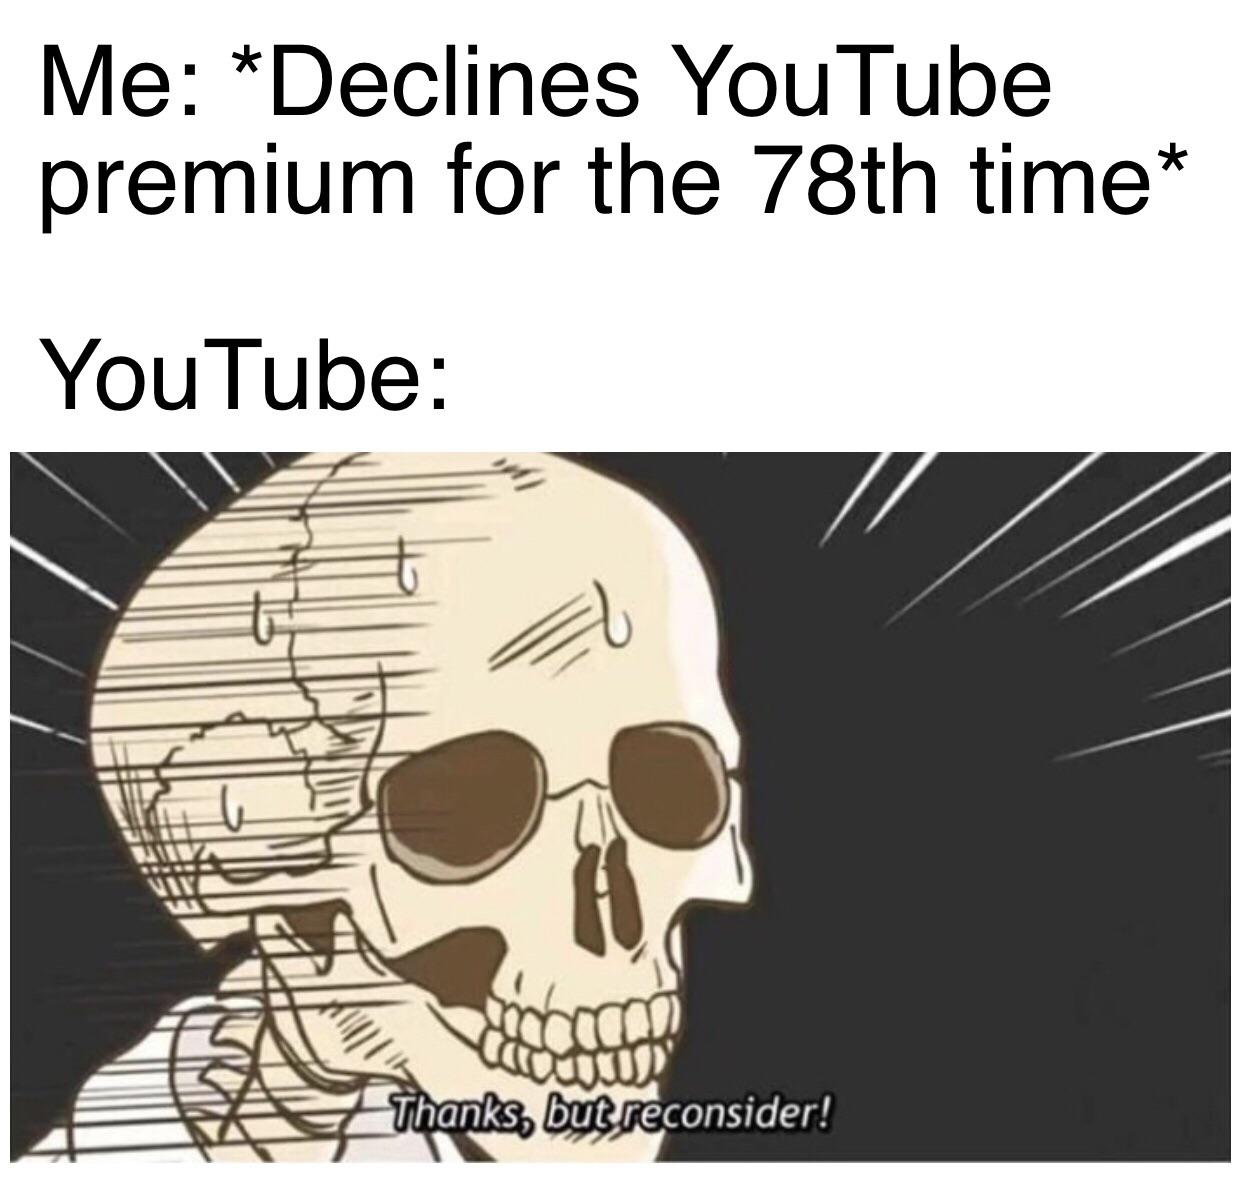 dank memes - funny memes - youtube premium meme - Me Declines YouTube premium for the 78th time YouTube Caccred Thanks, but reconsider!